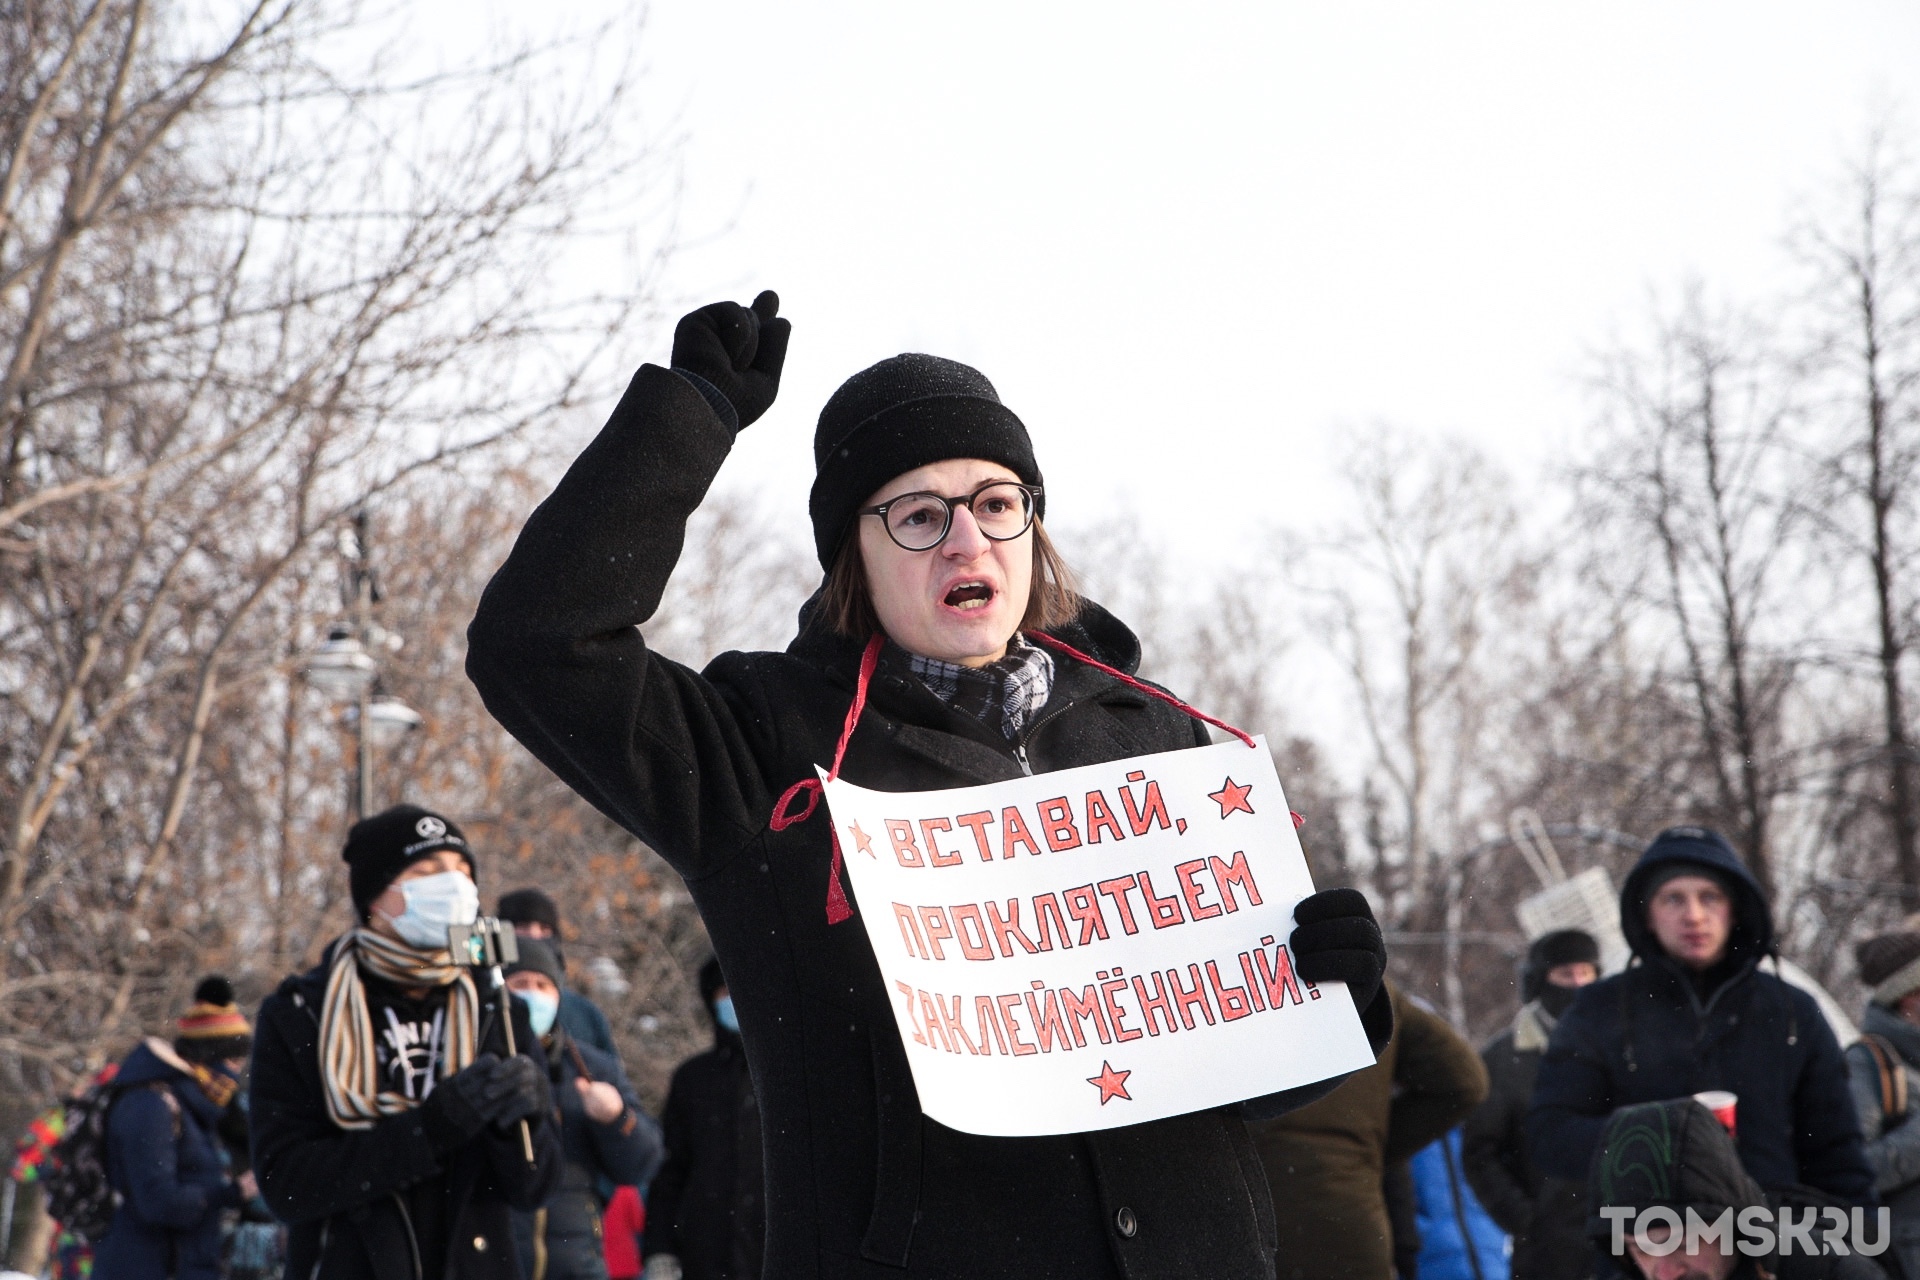 Фото и видео: кадры с запретного митинга в Томске 